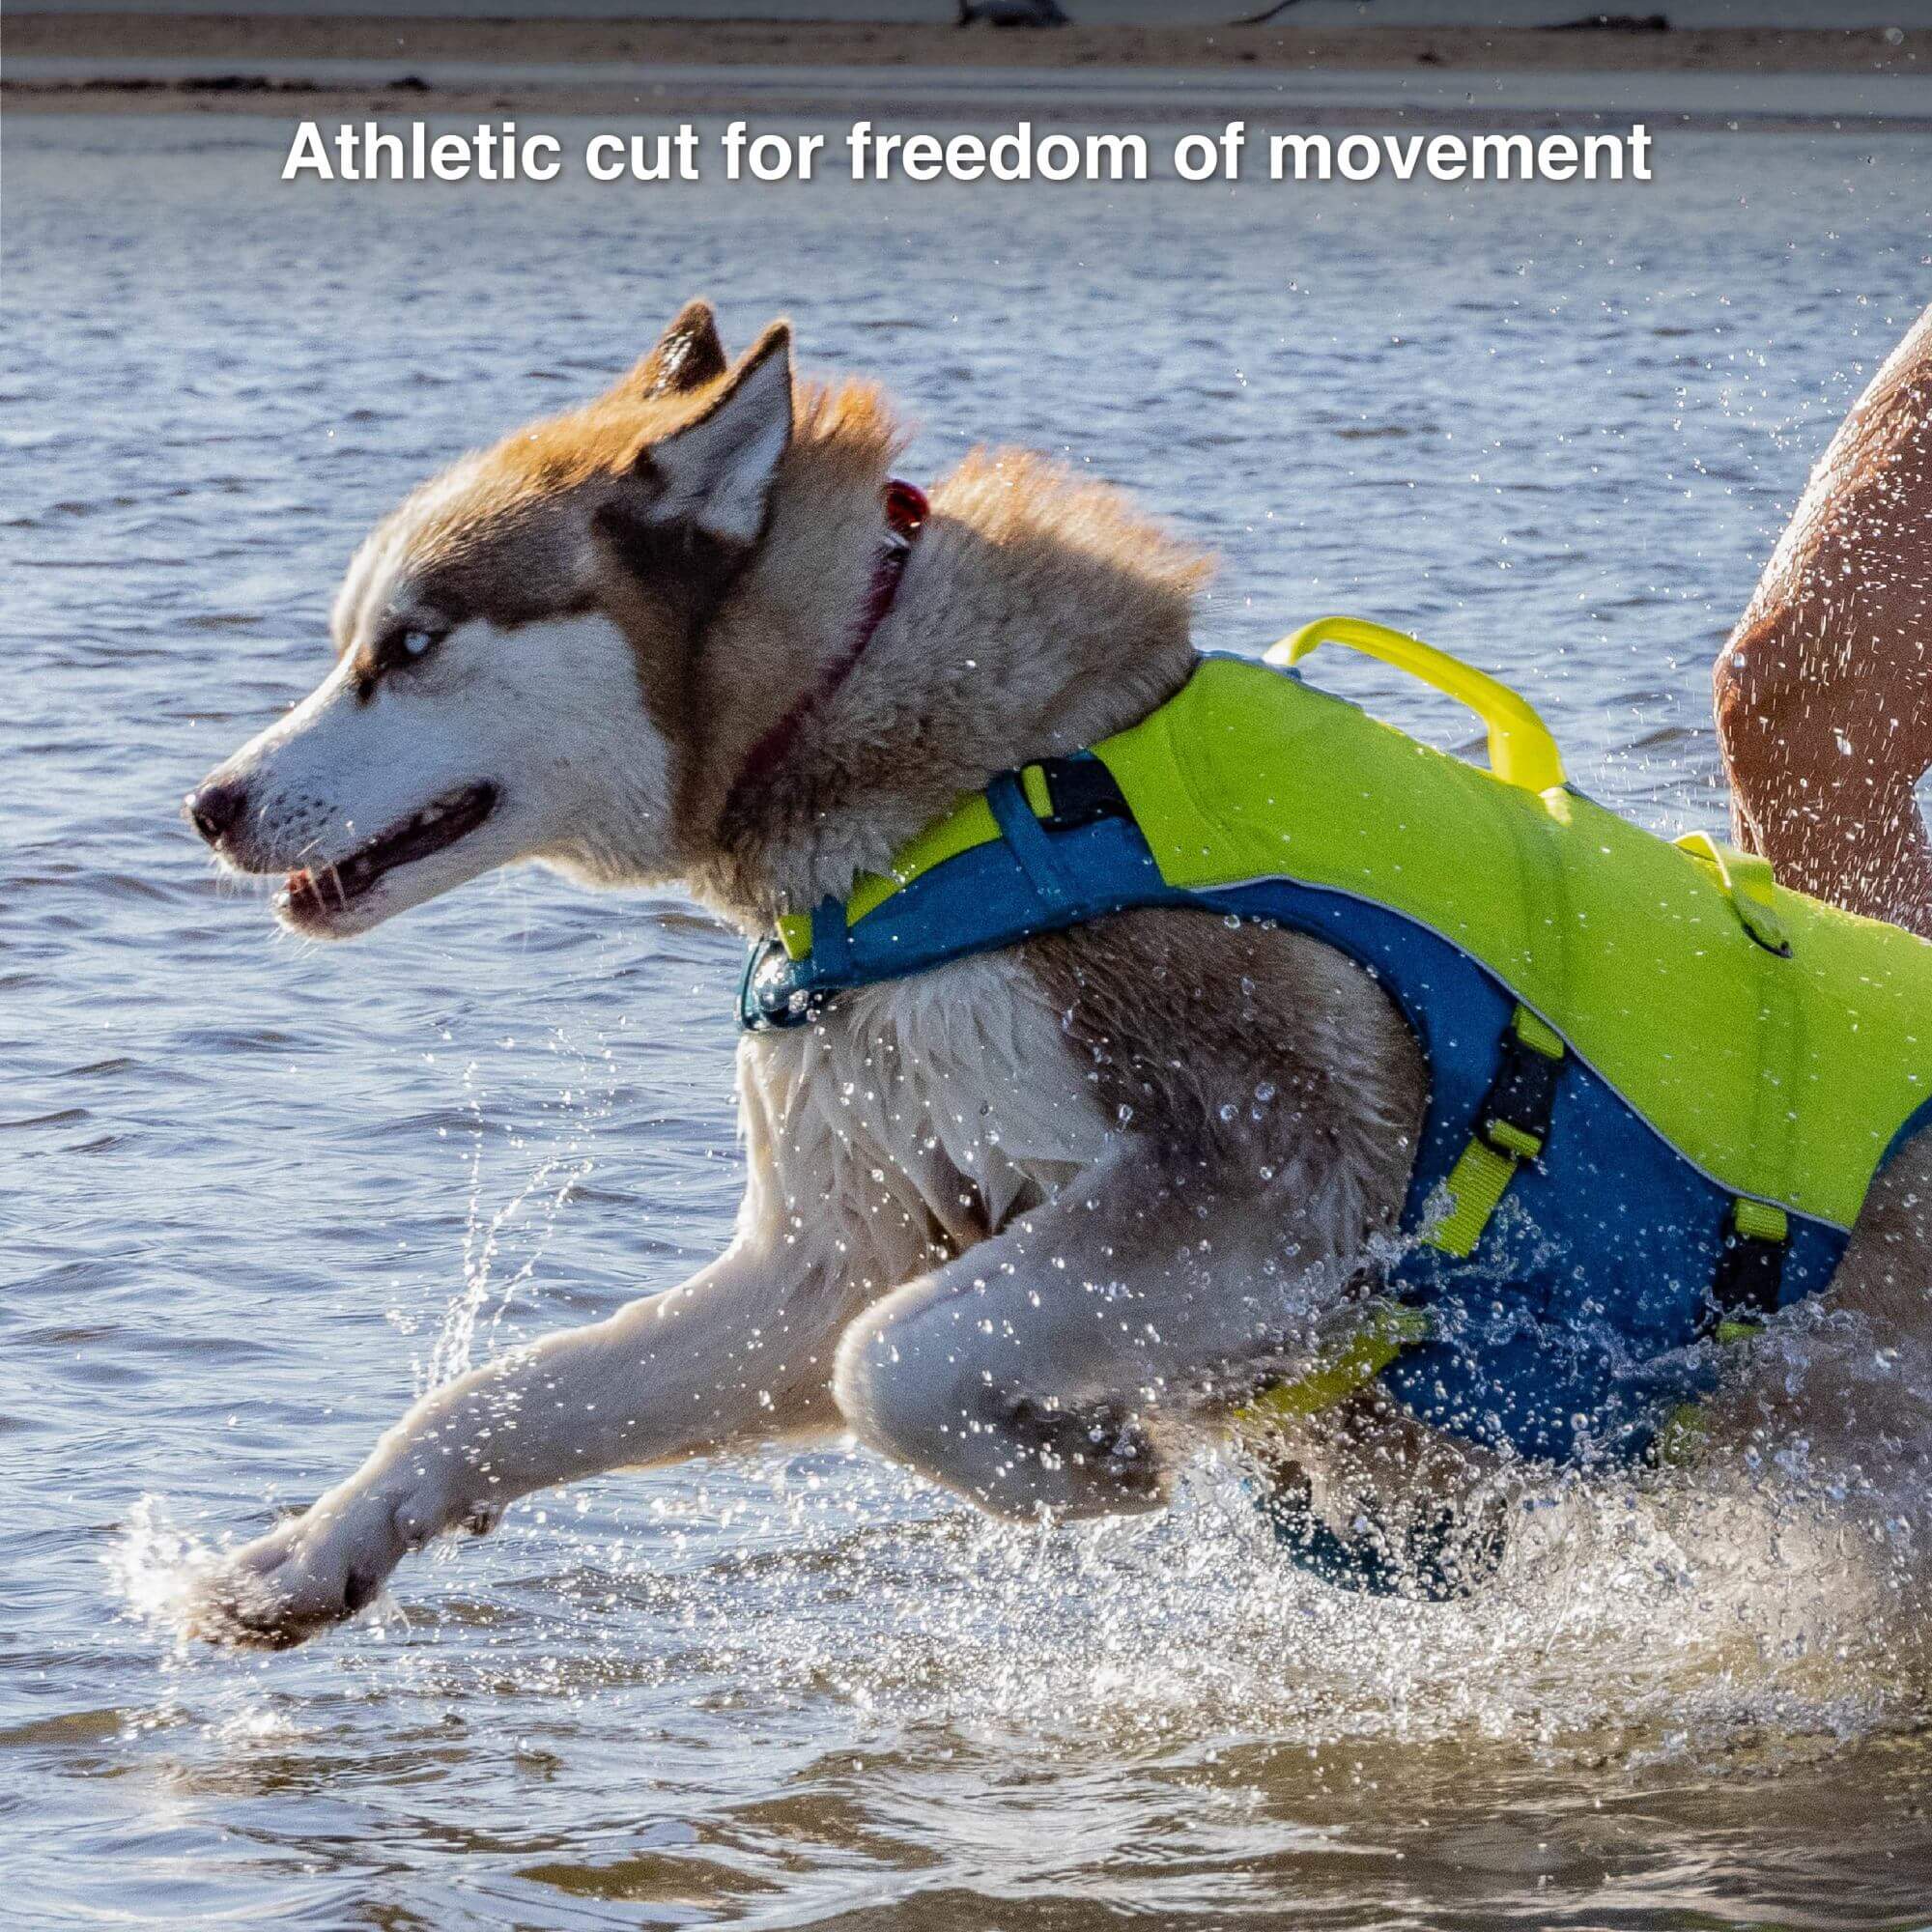 dog running through water in a kurgo yellow life jacket 